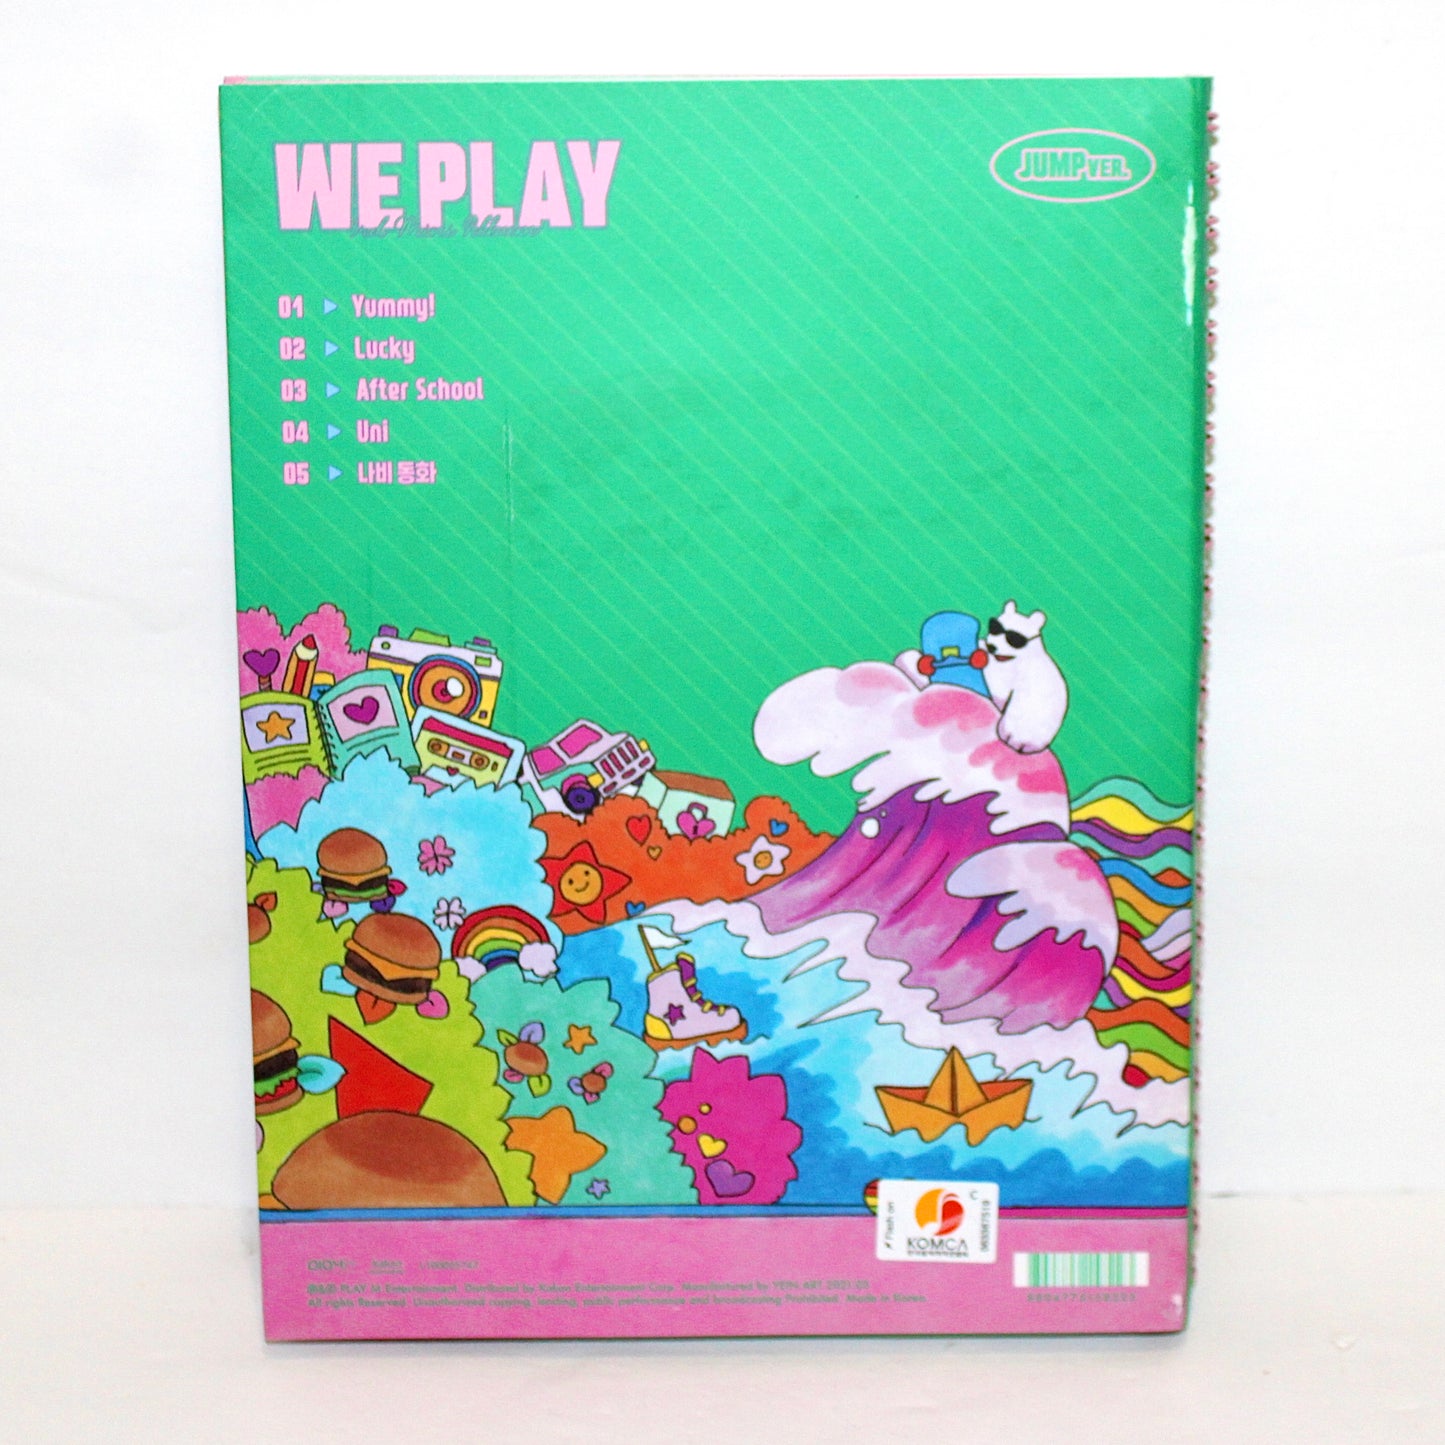 WEEEKLY 3rd Mini Album: We Play | Jump Ver.